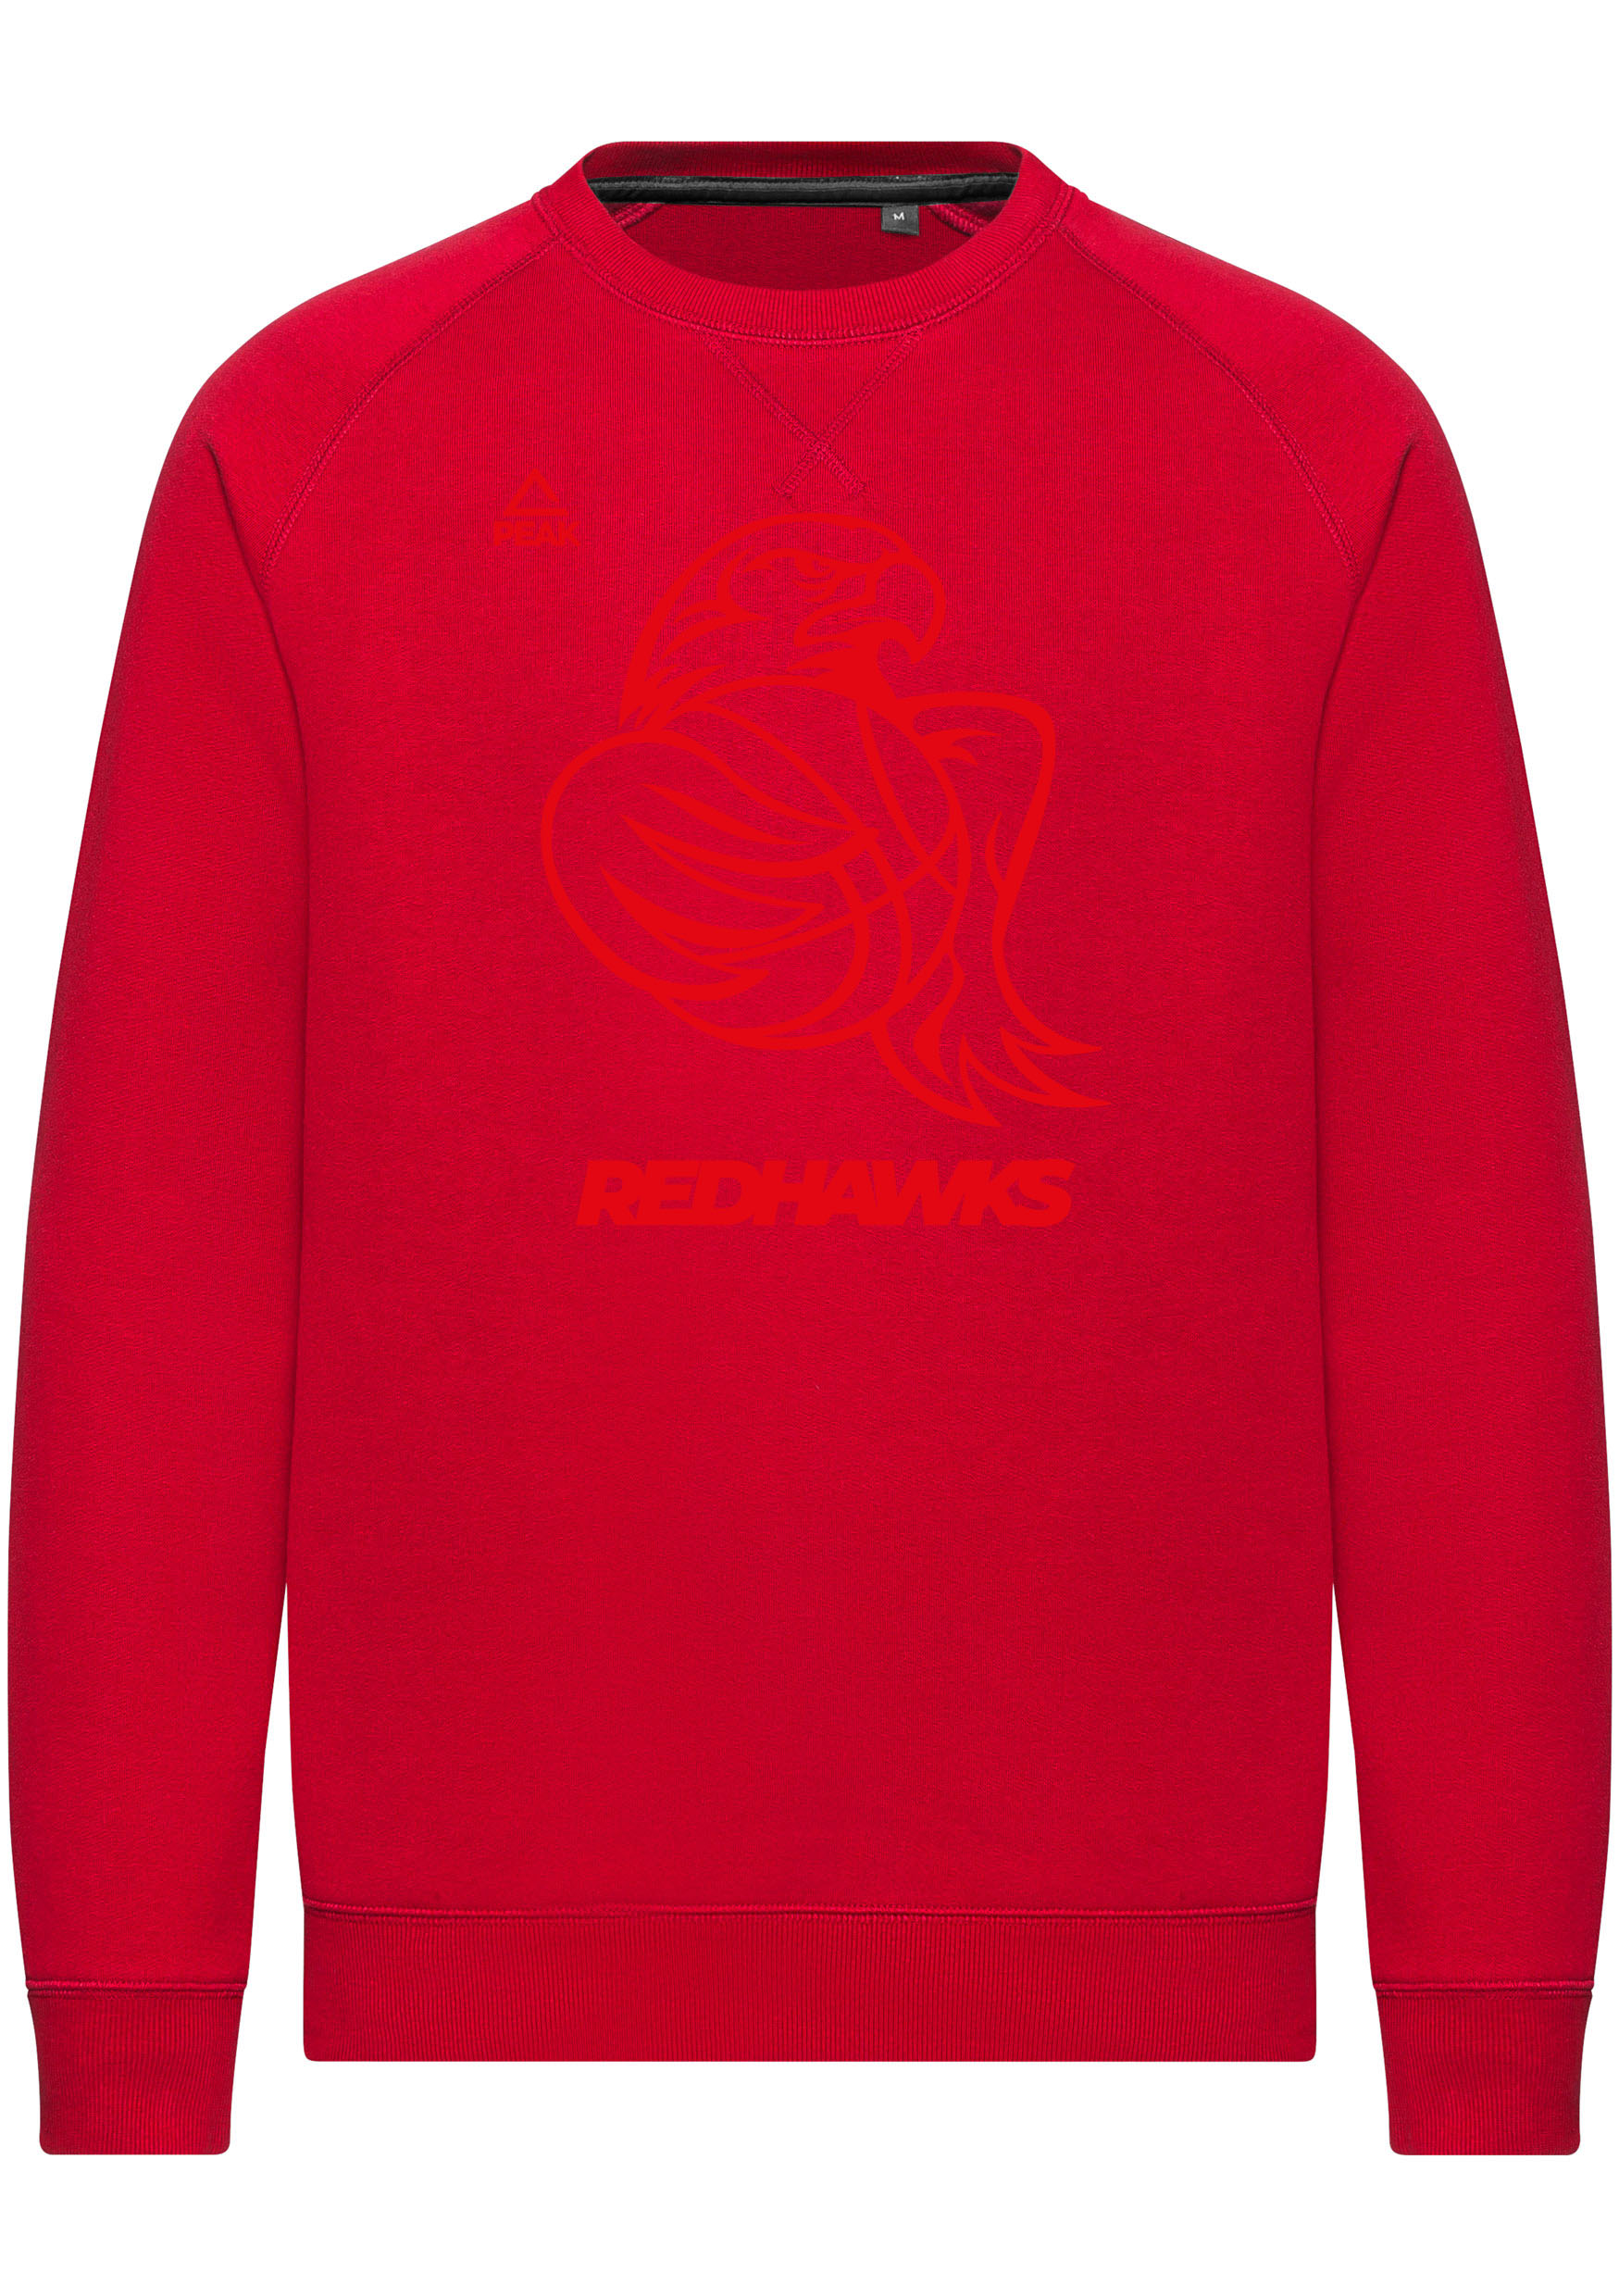 Red Hawks Sweatshirt Color Edition rot rot